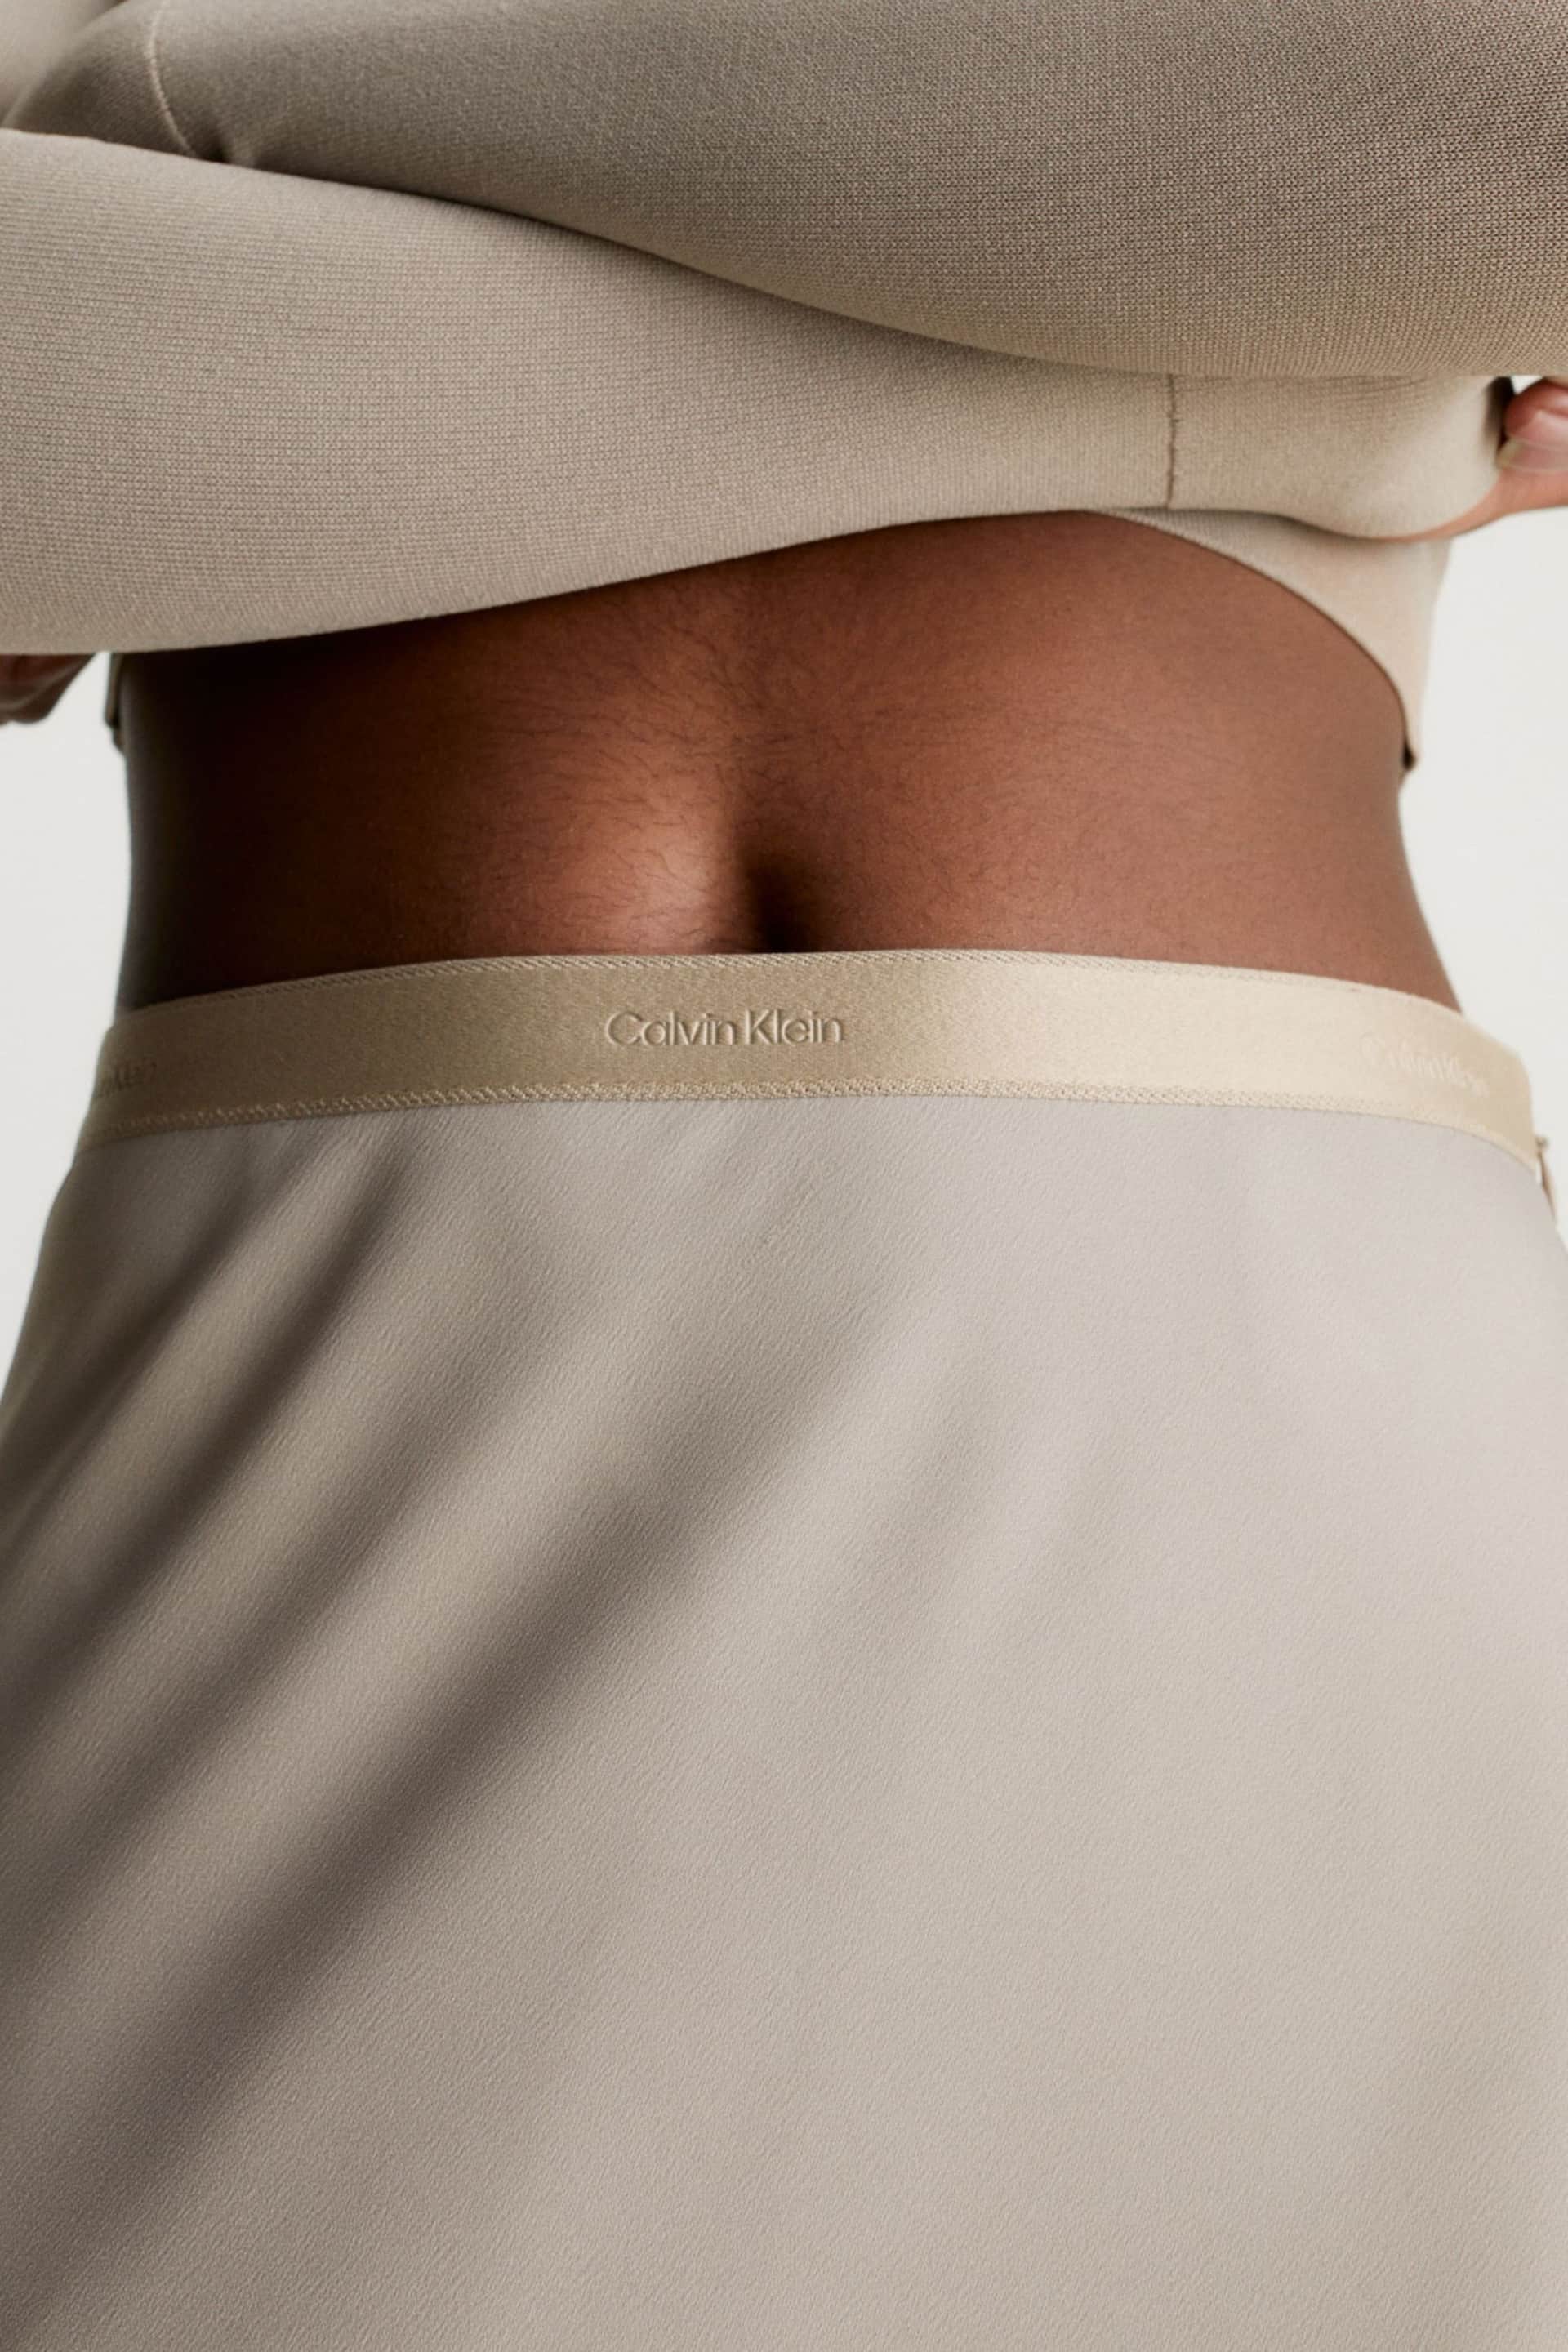 Calvin Klein Grey Recycled Midi Skirt - Image 3 of 5